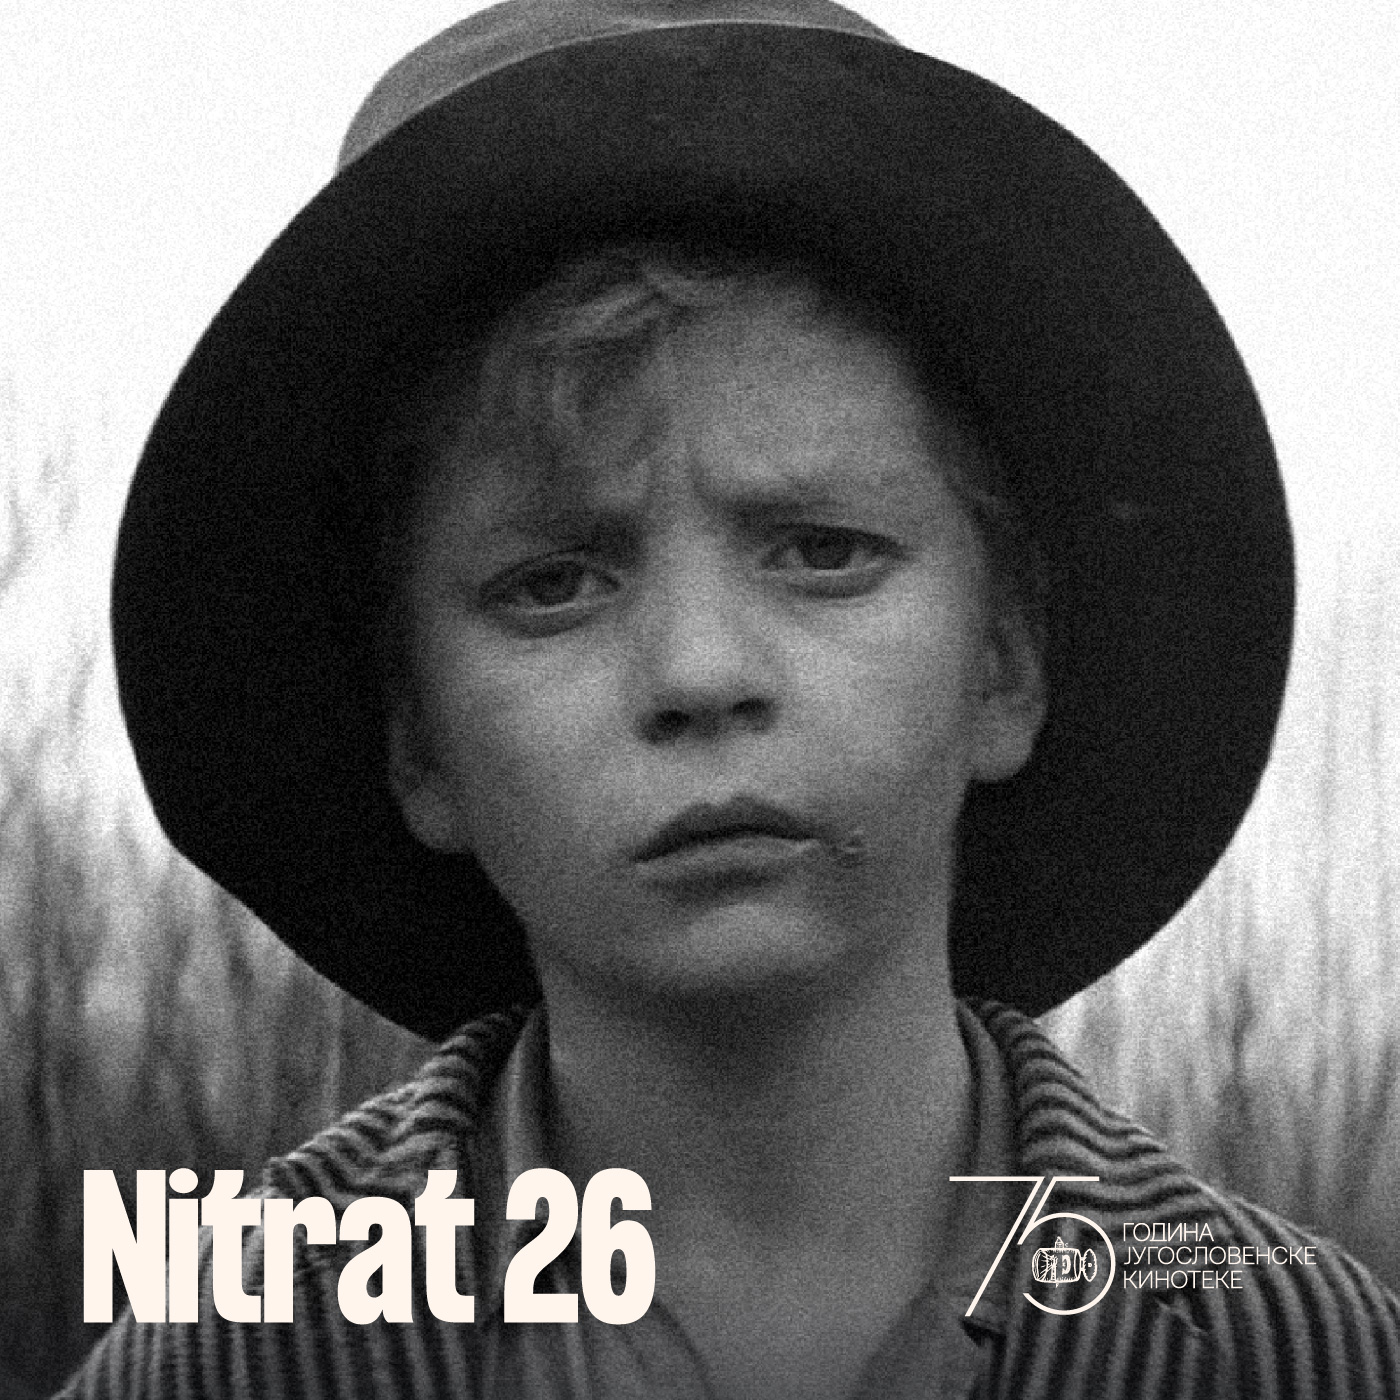 NITRAT 26, najava programa, web ig post-30